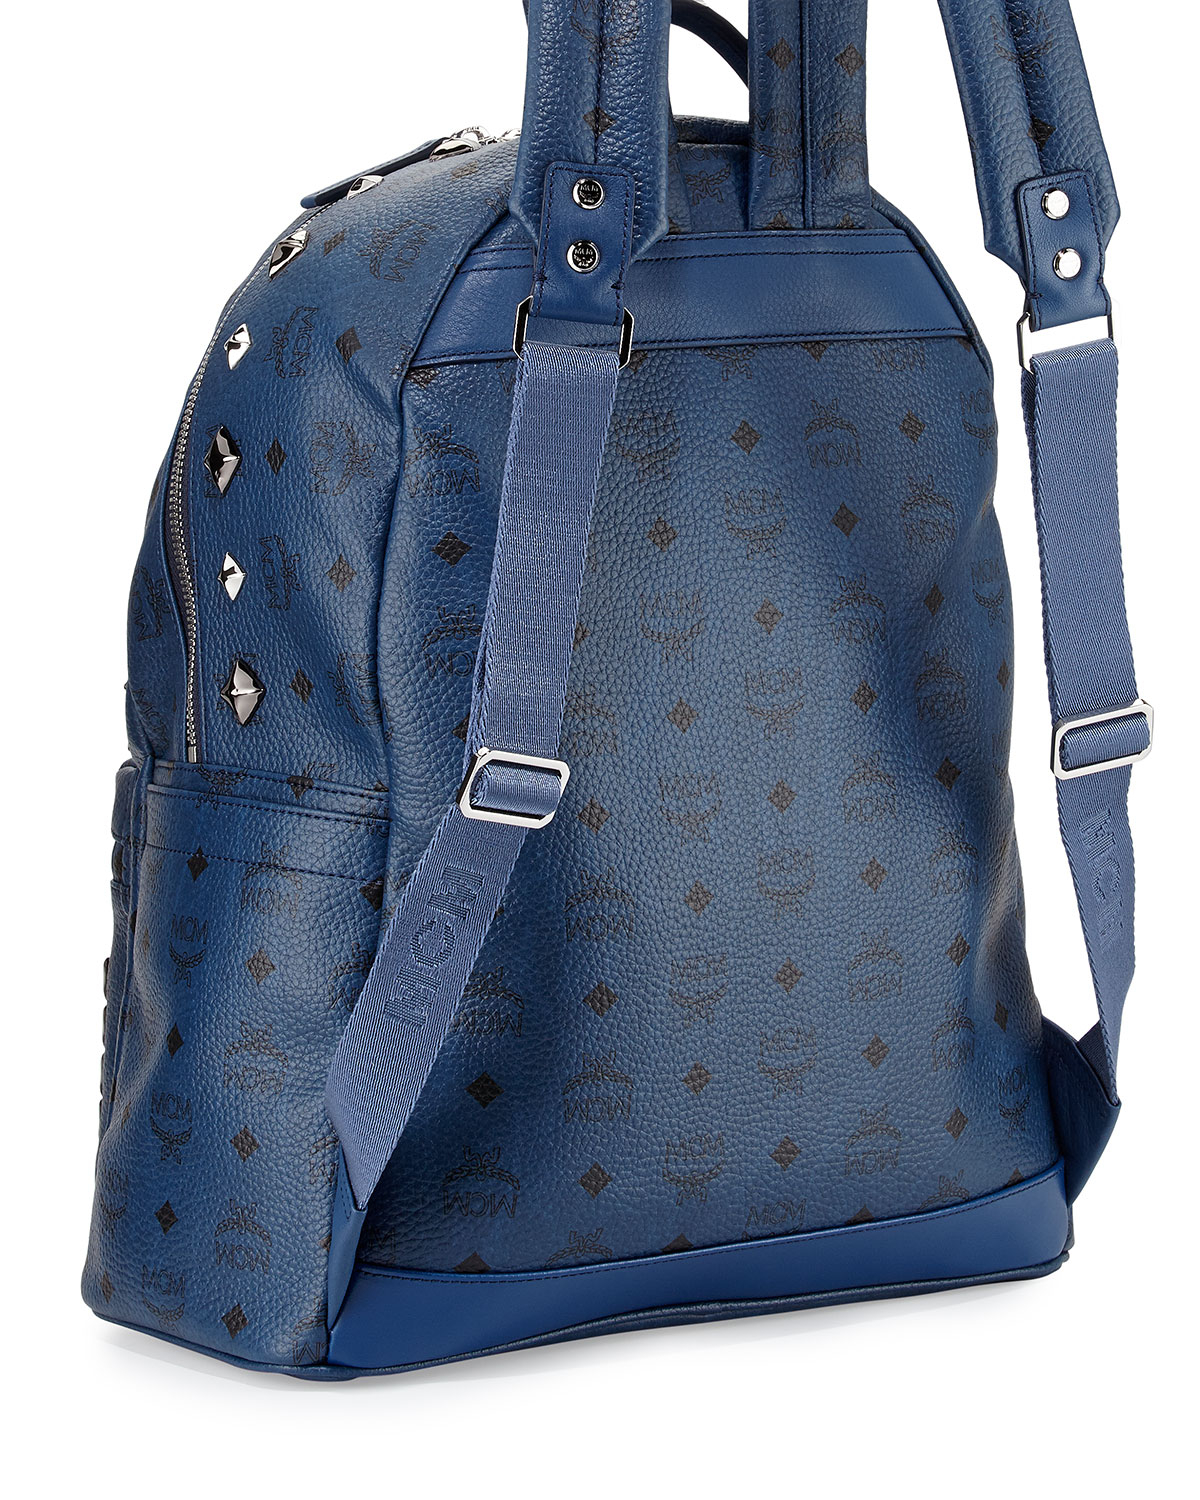 Lyst - Mcm Stark M Stud Visetos Medium Backpack in Blue for Men